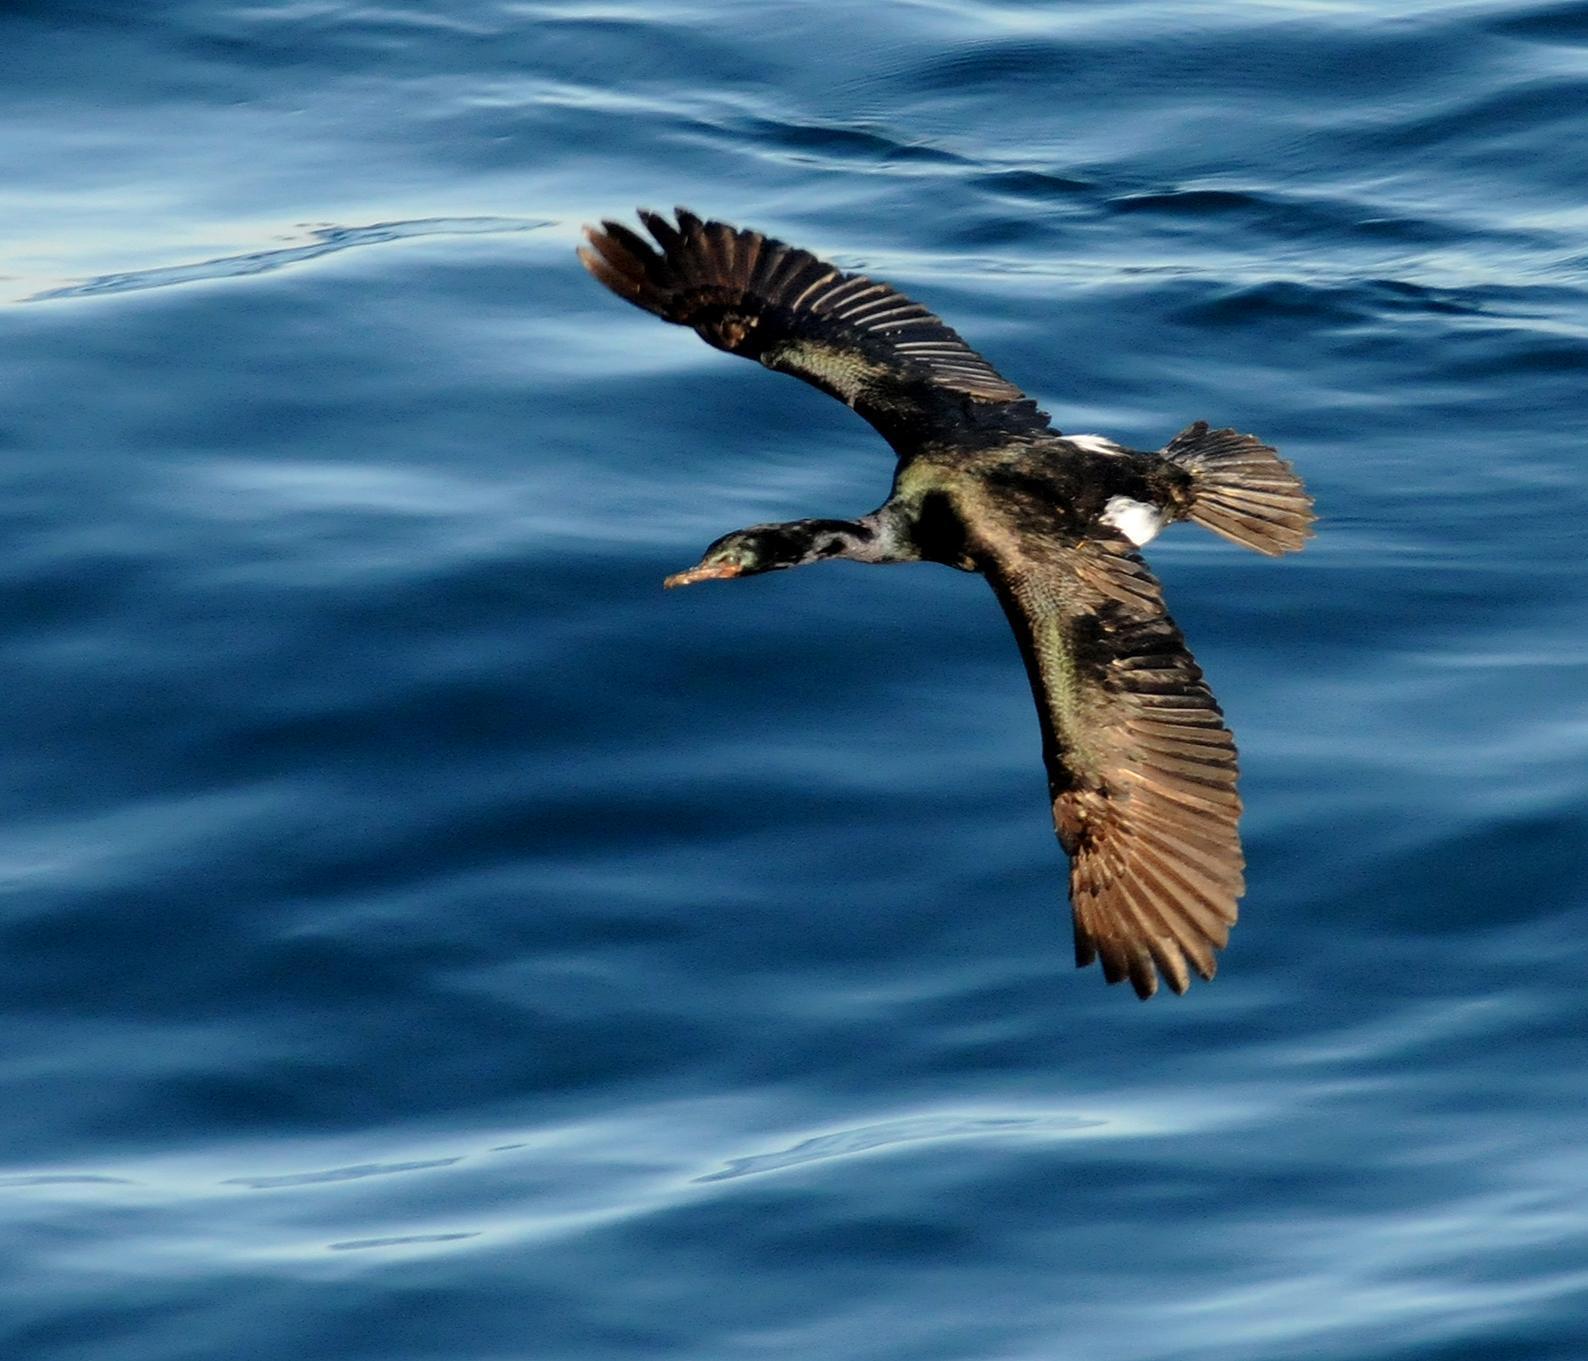 Pelagic Cormorant Photo by Steven Mlodinow